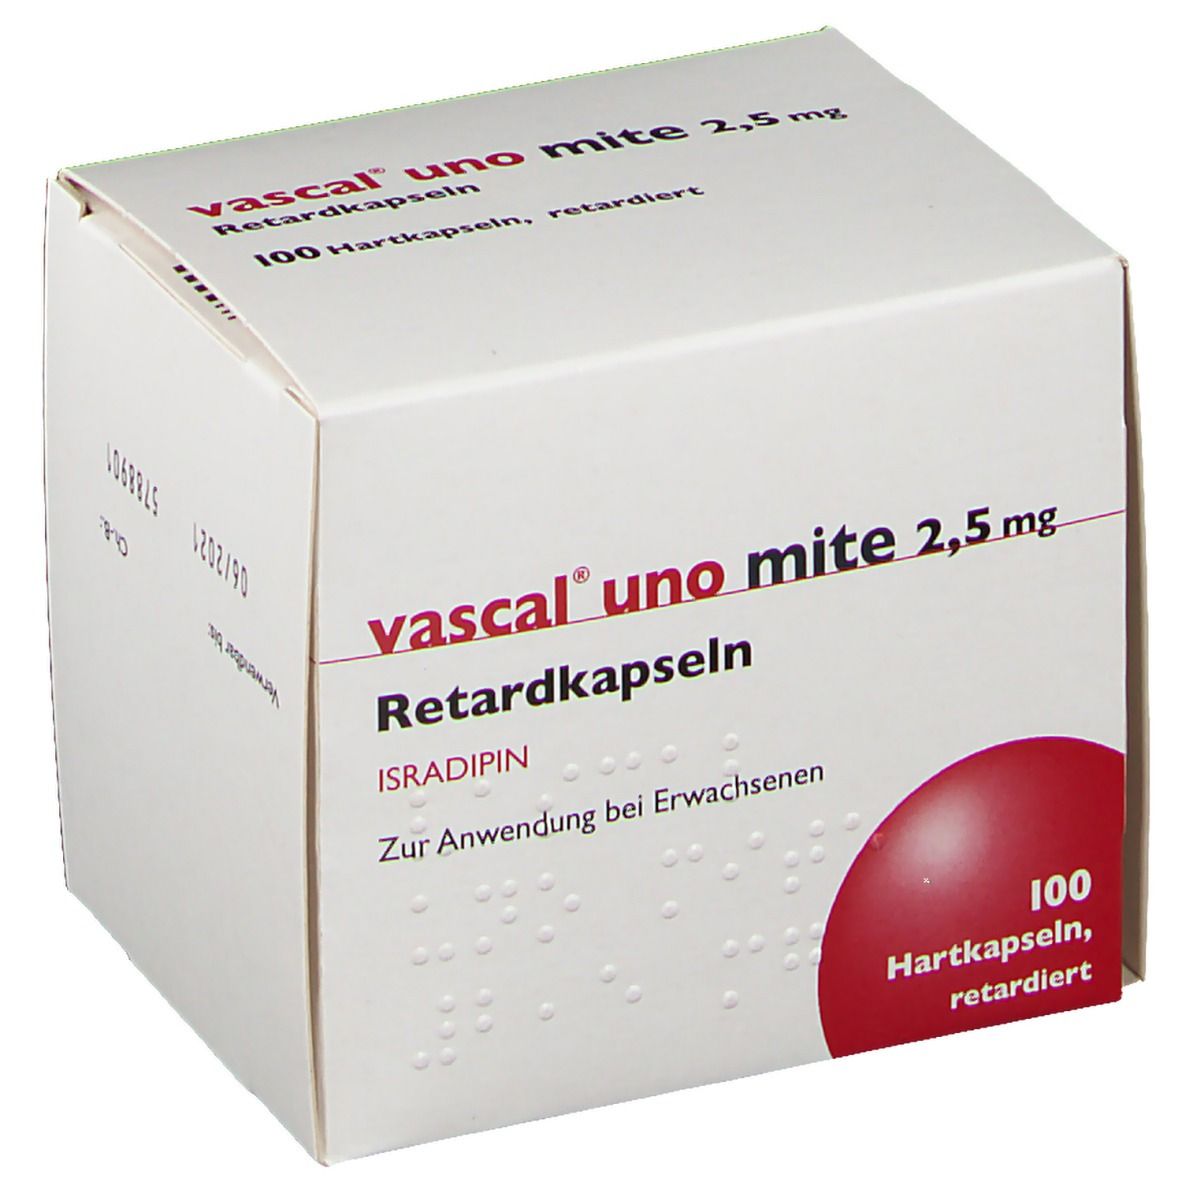 vascal® uno mite 2,5 mg